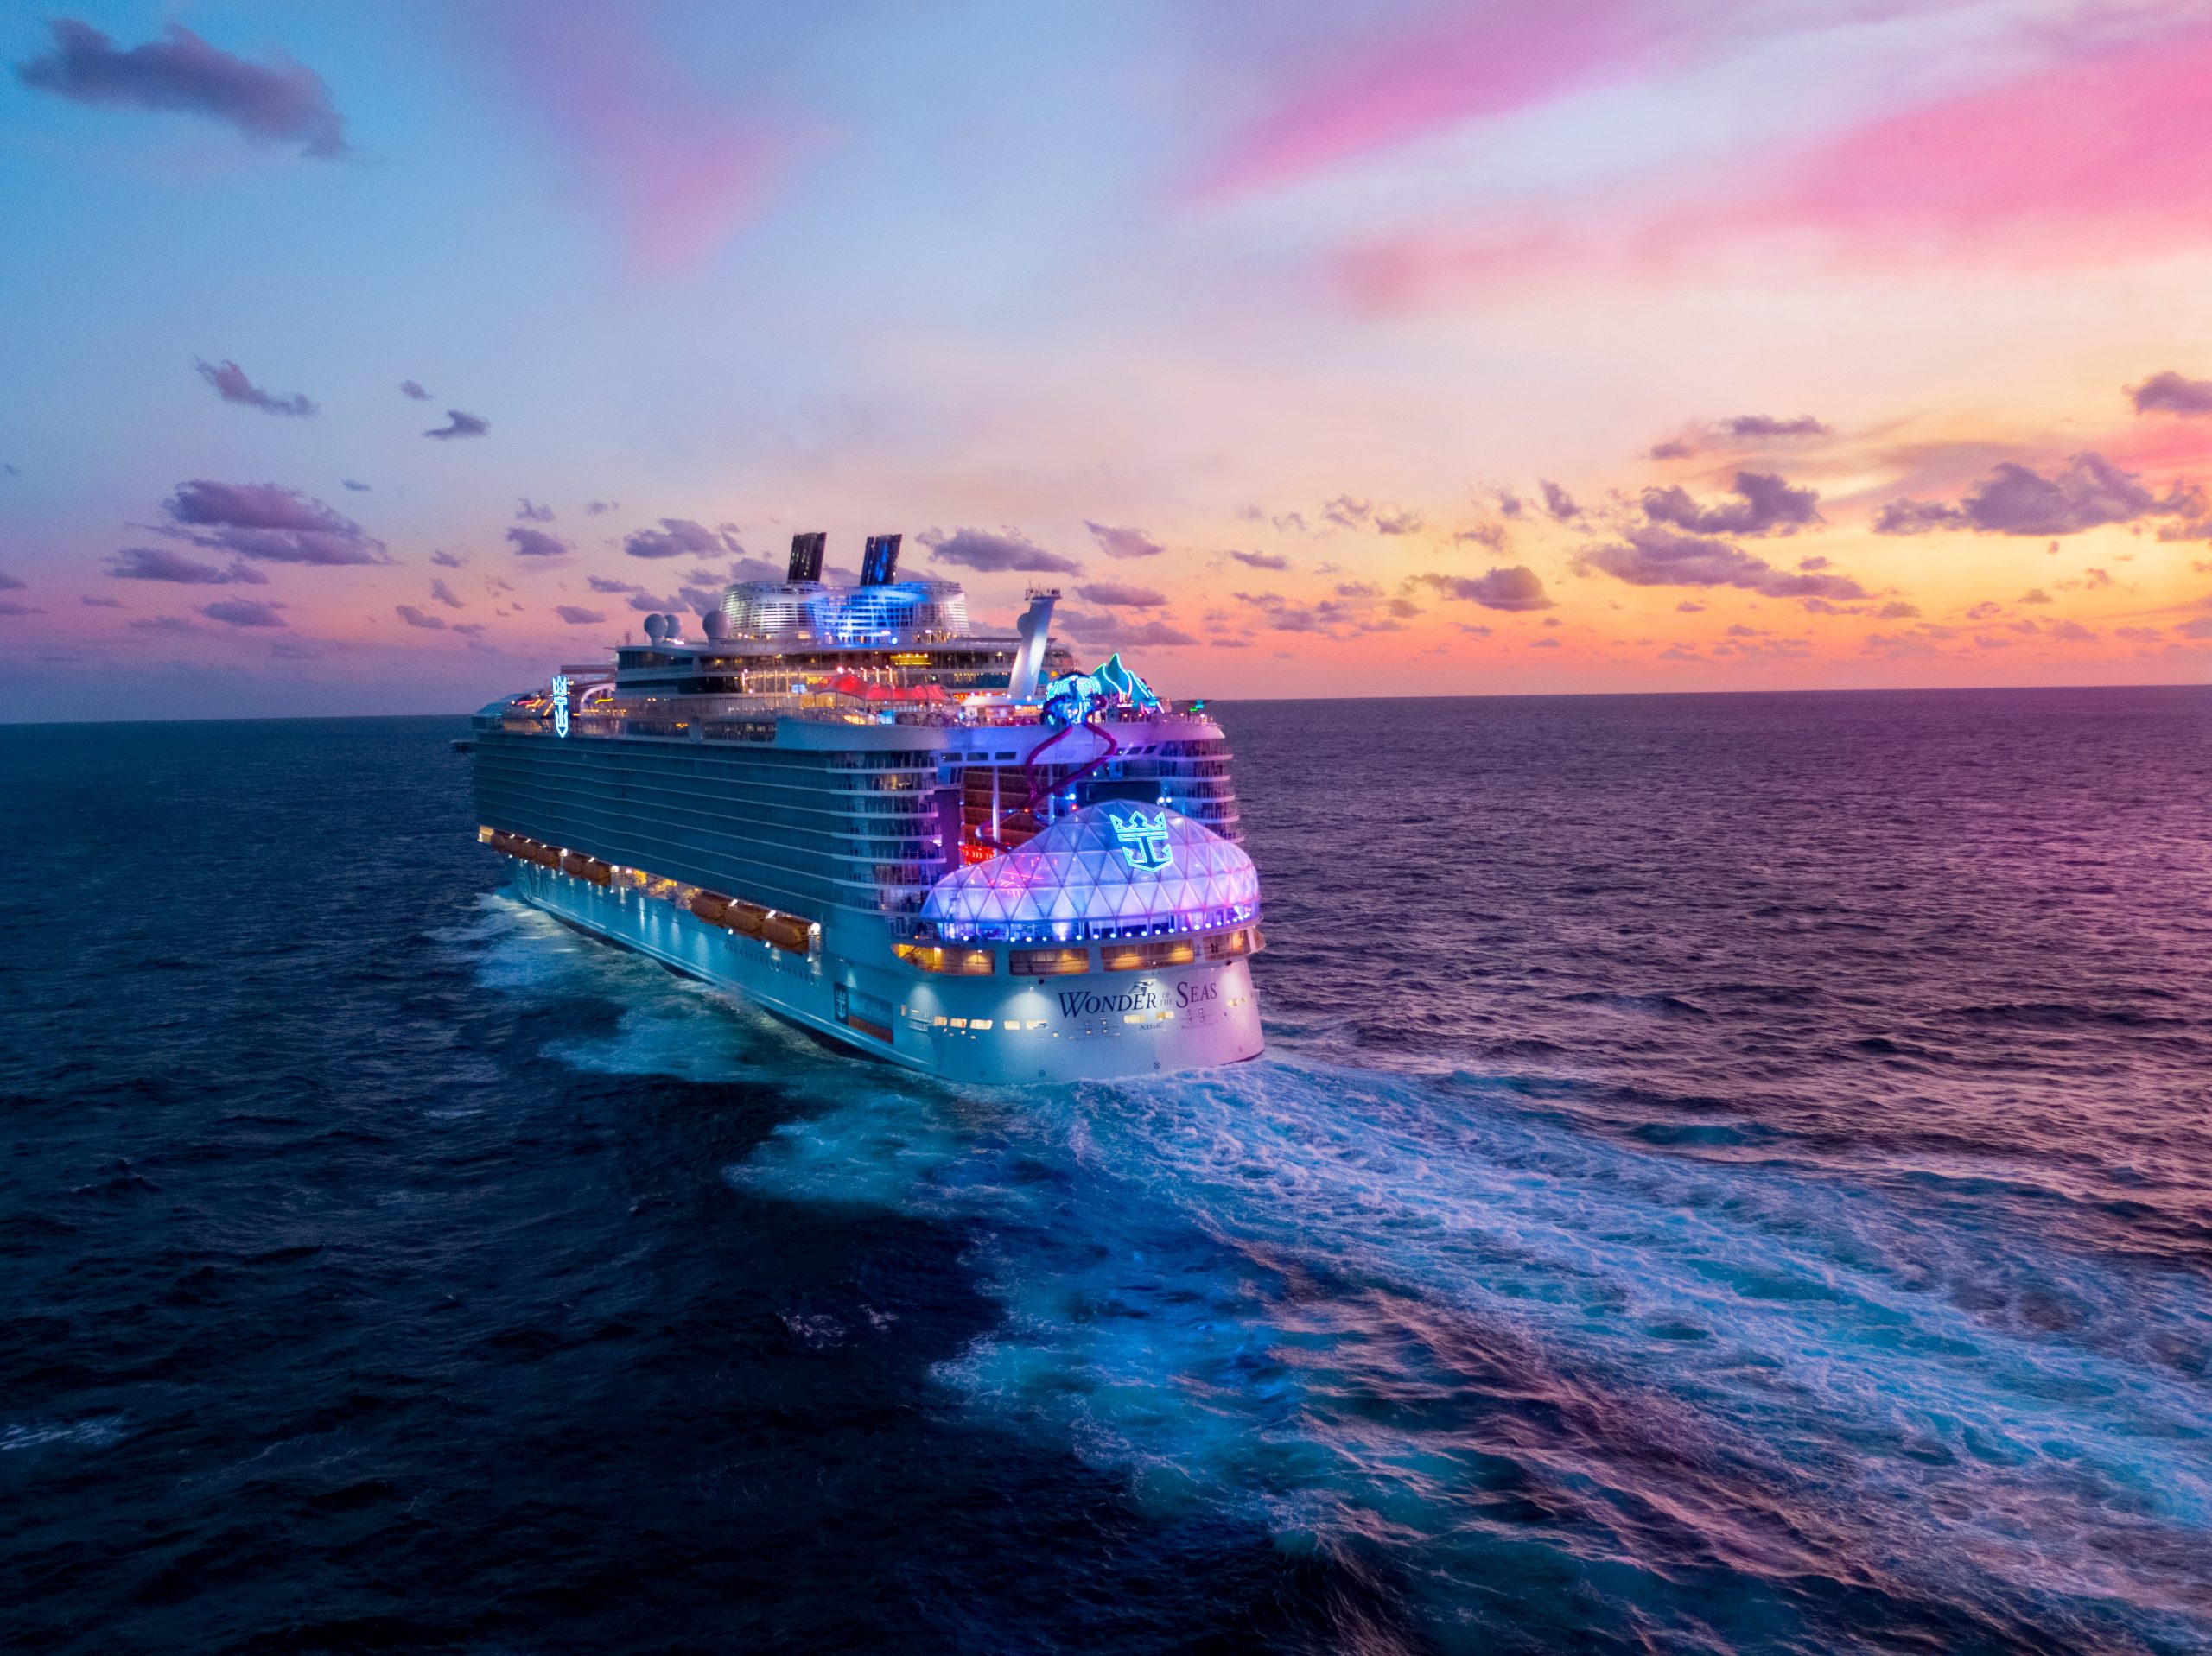 Cruise Ships - Introducing Royal Caribbean's Oasis Class Cruise Ships